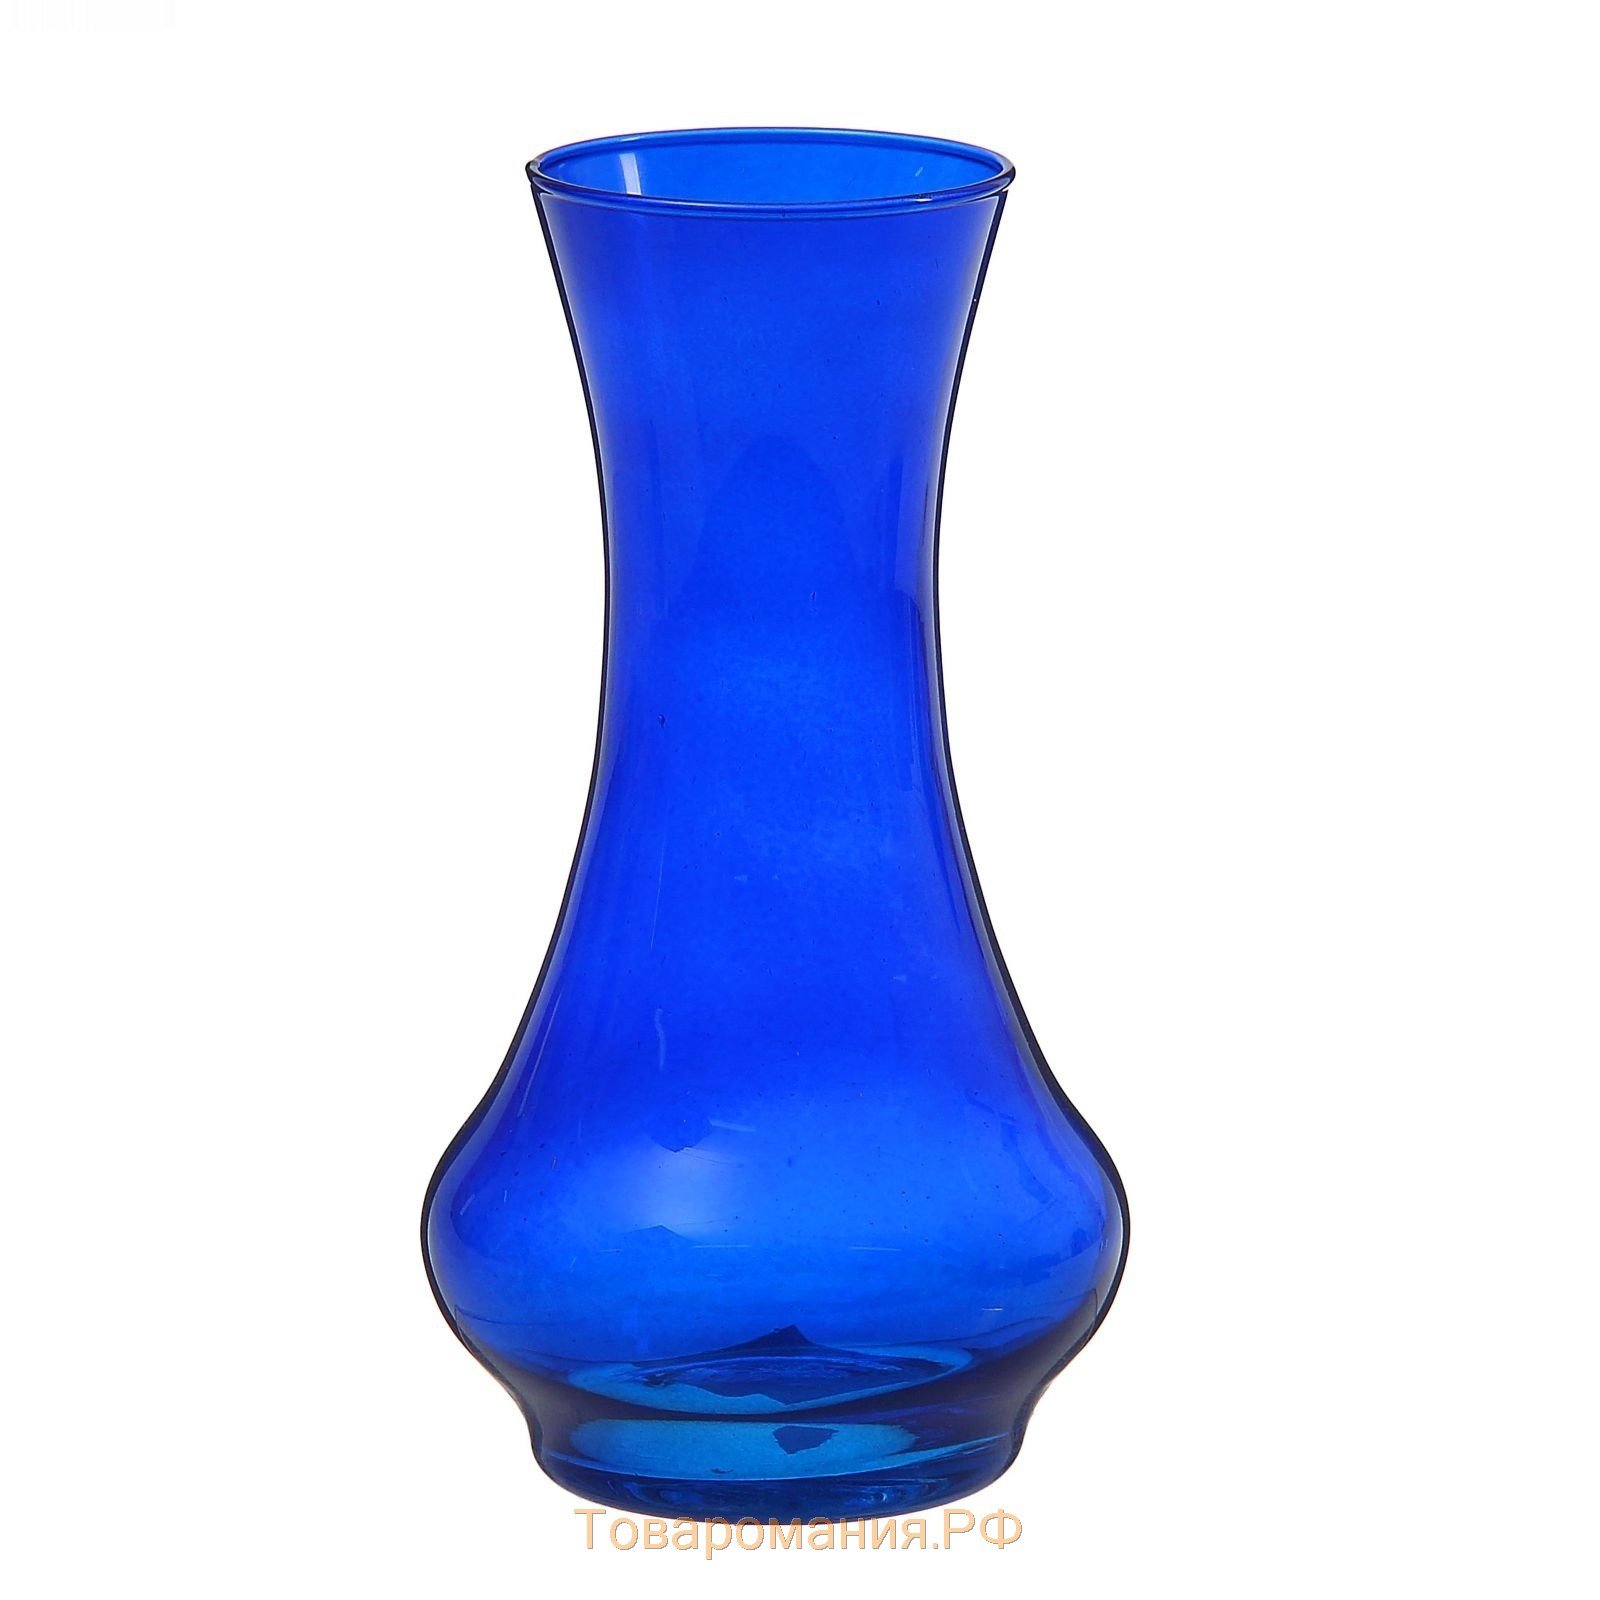 Стеклянный синий цветок. Ваза синяя. Синяя стеклянная ваза. Ваза синее стекло. Синяя ваза для цветов.